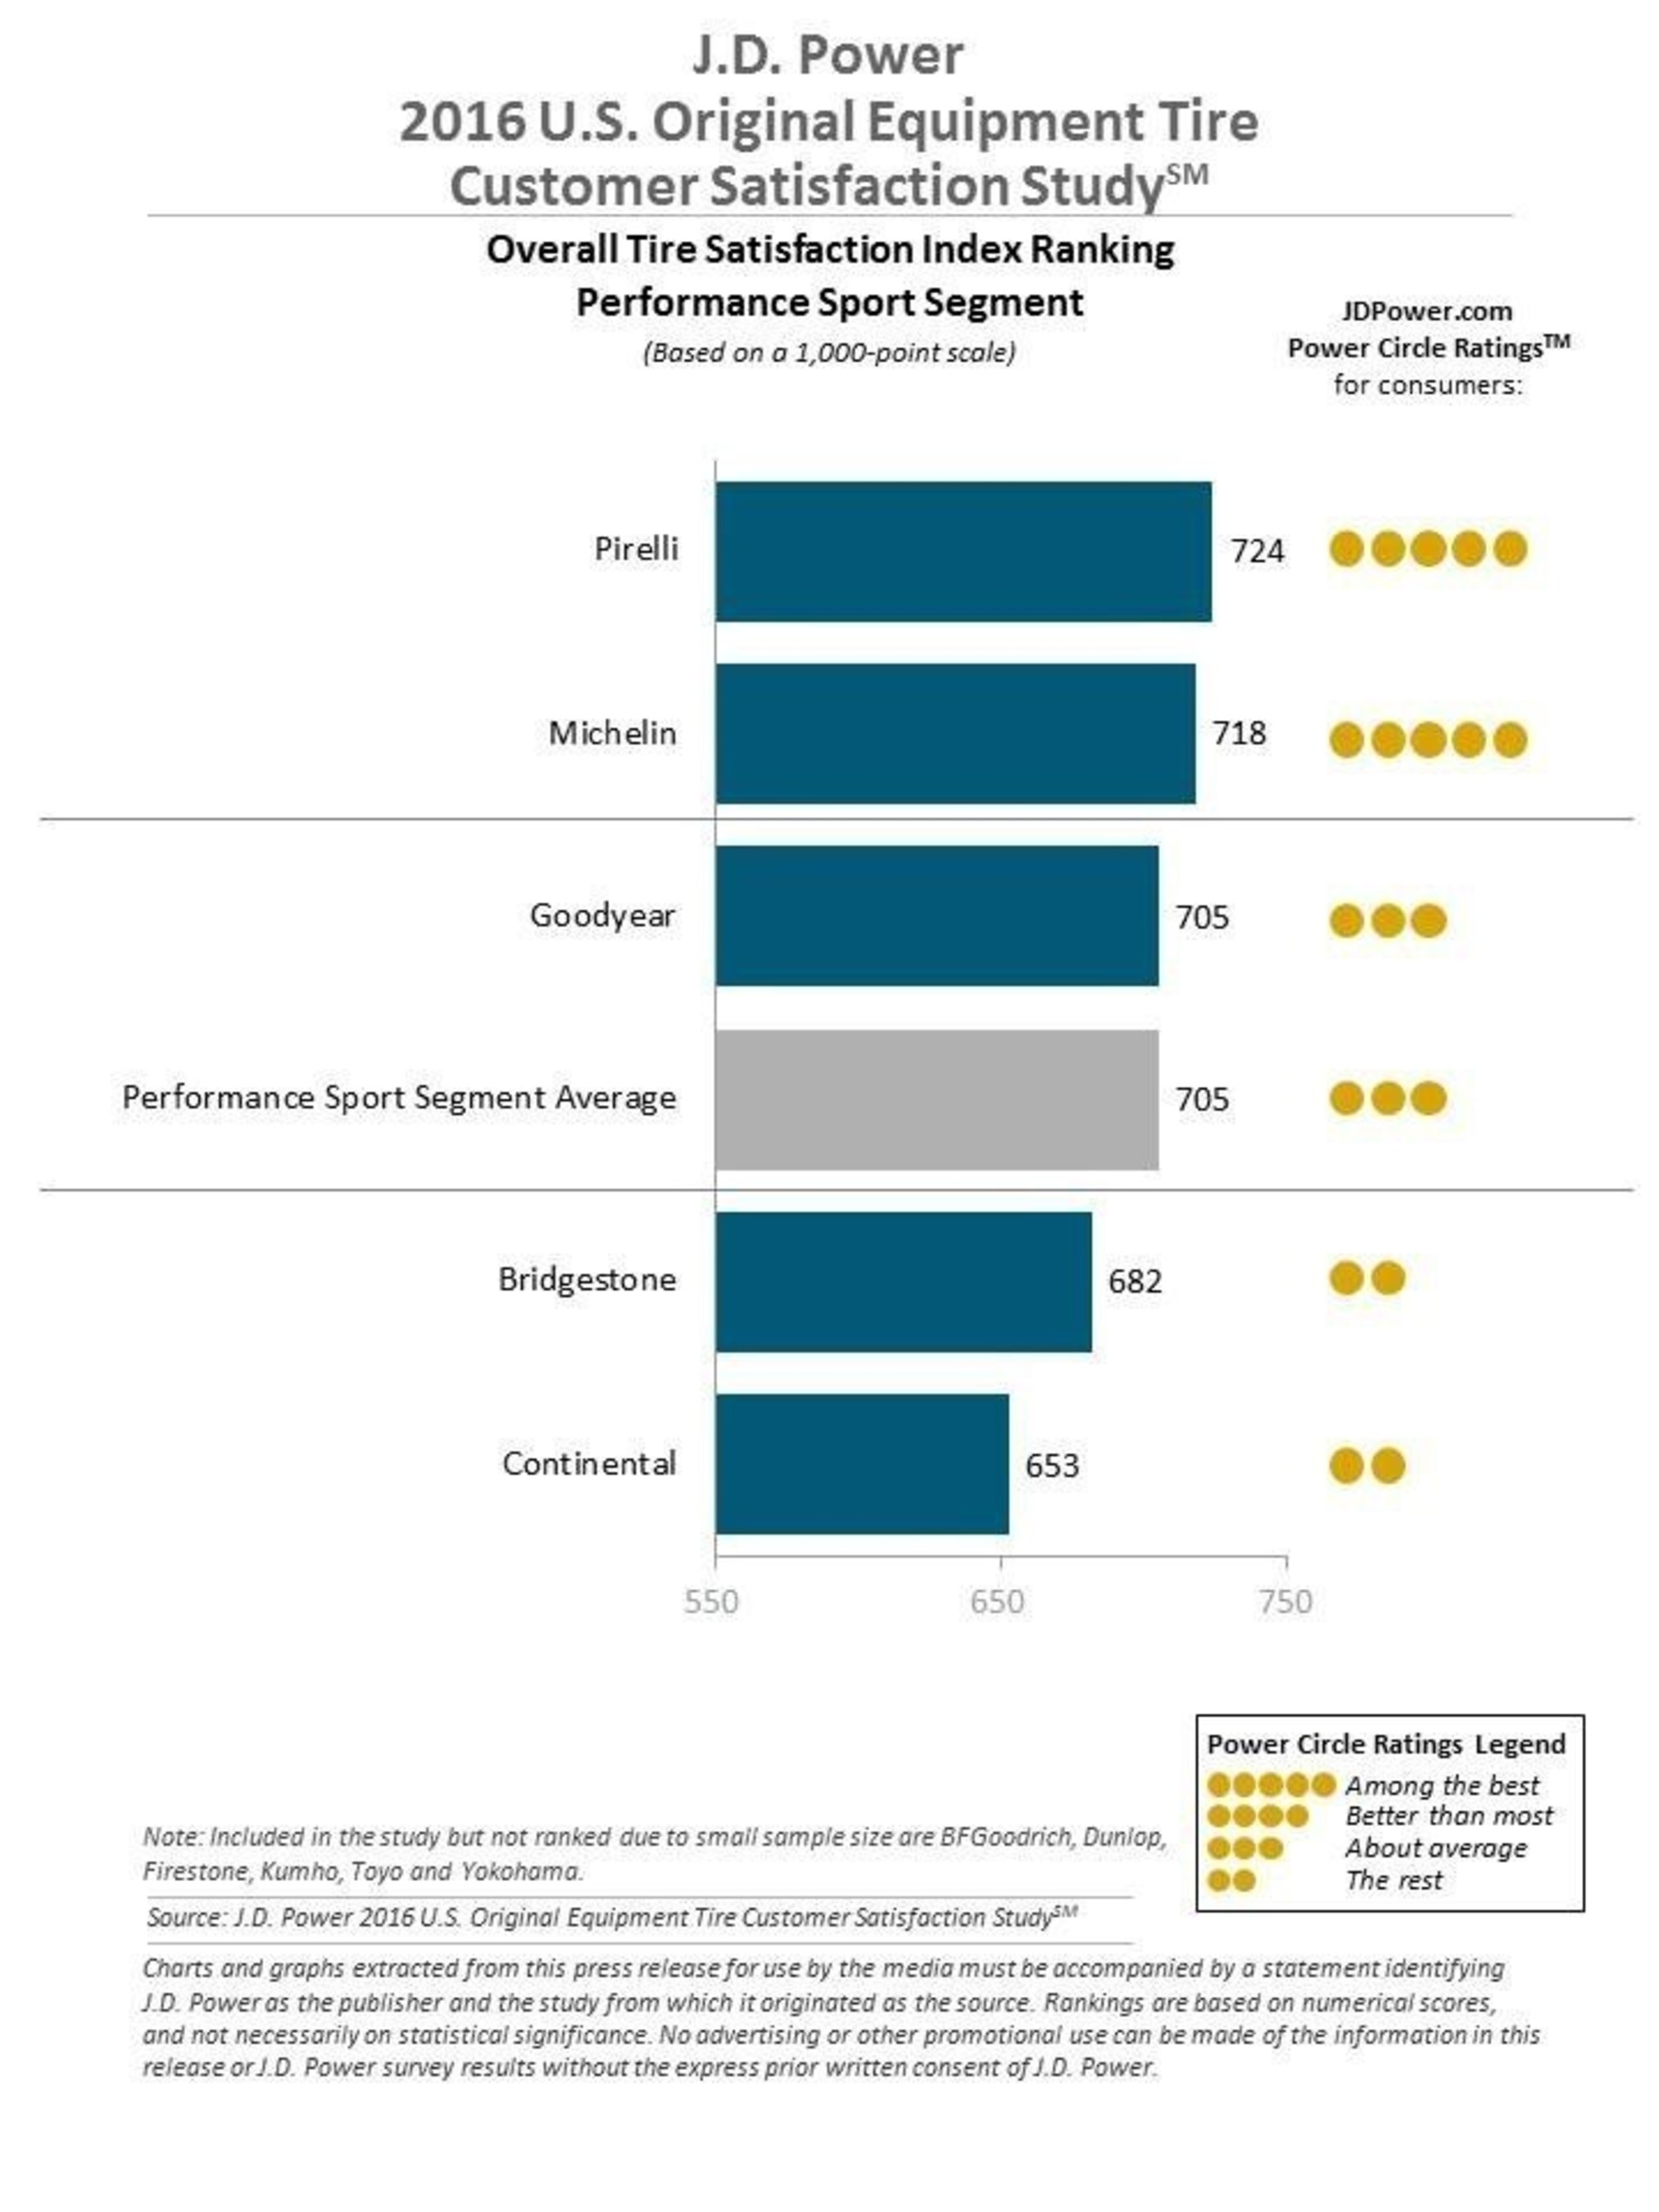 2016 OE Tire Ranking Performance Sport